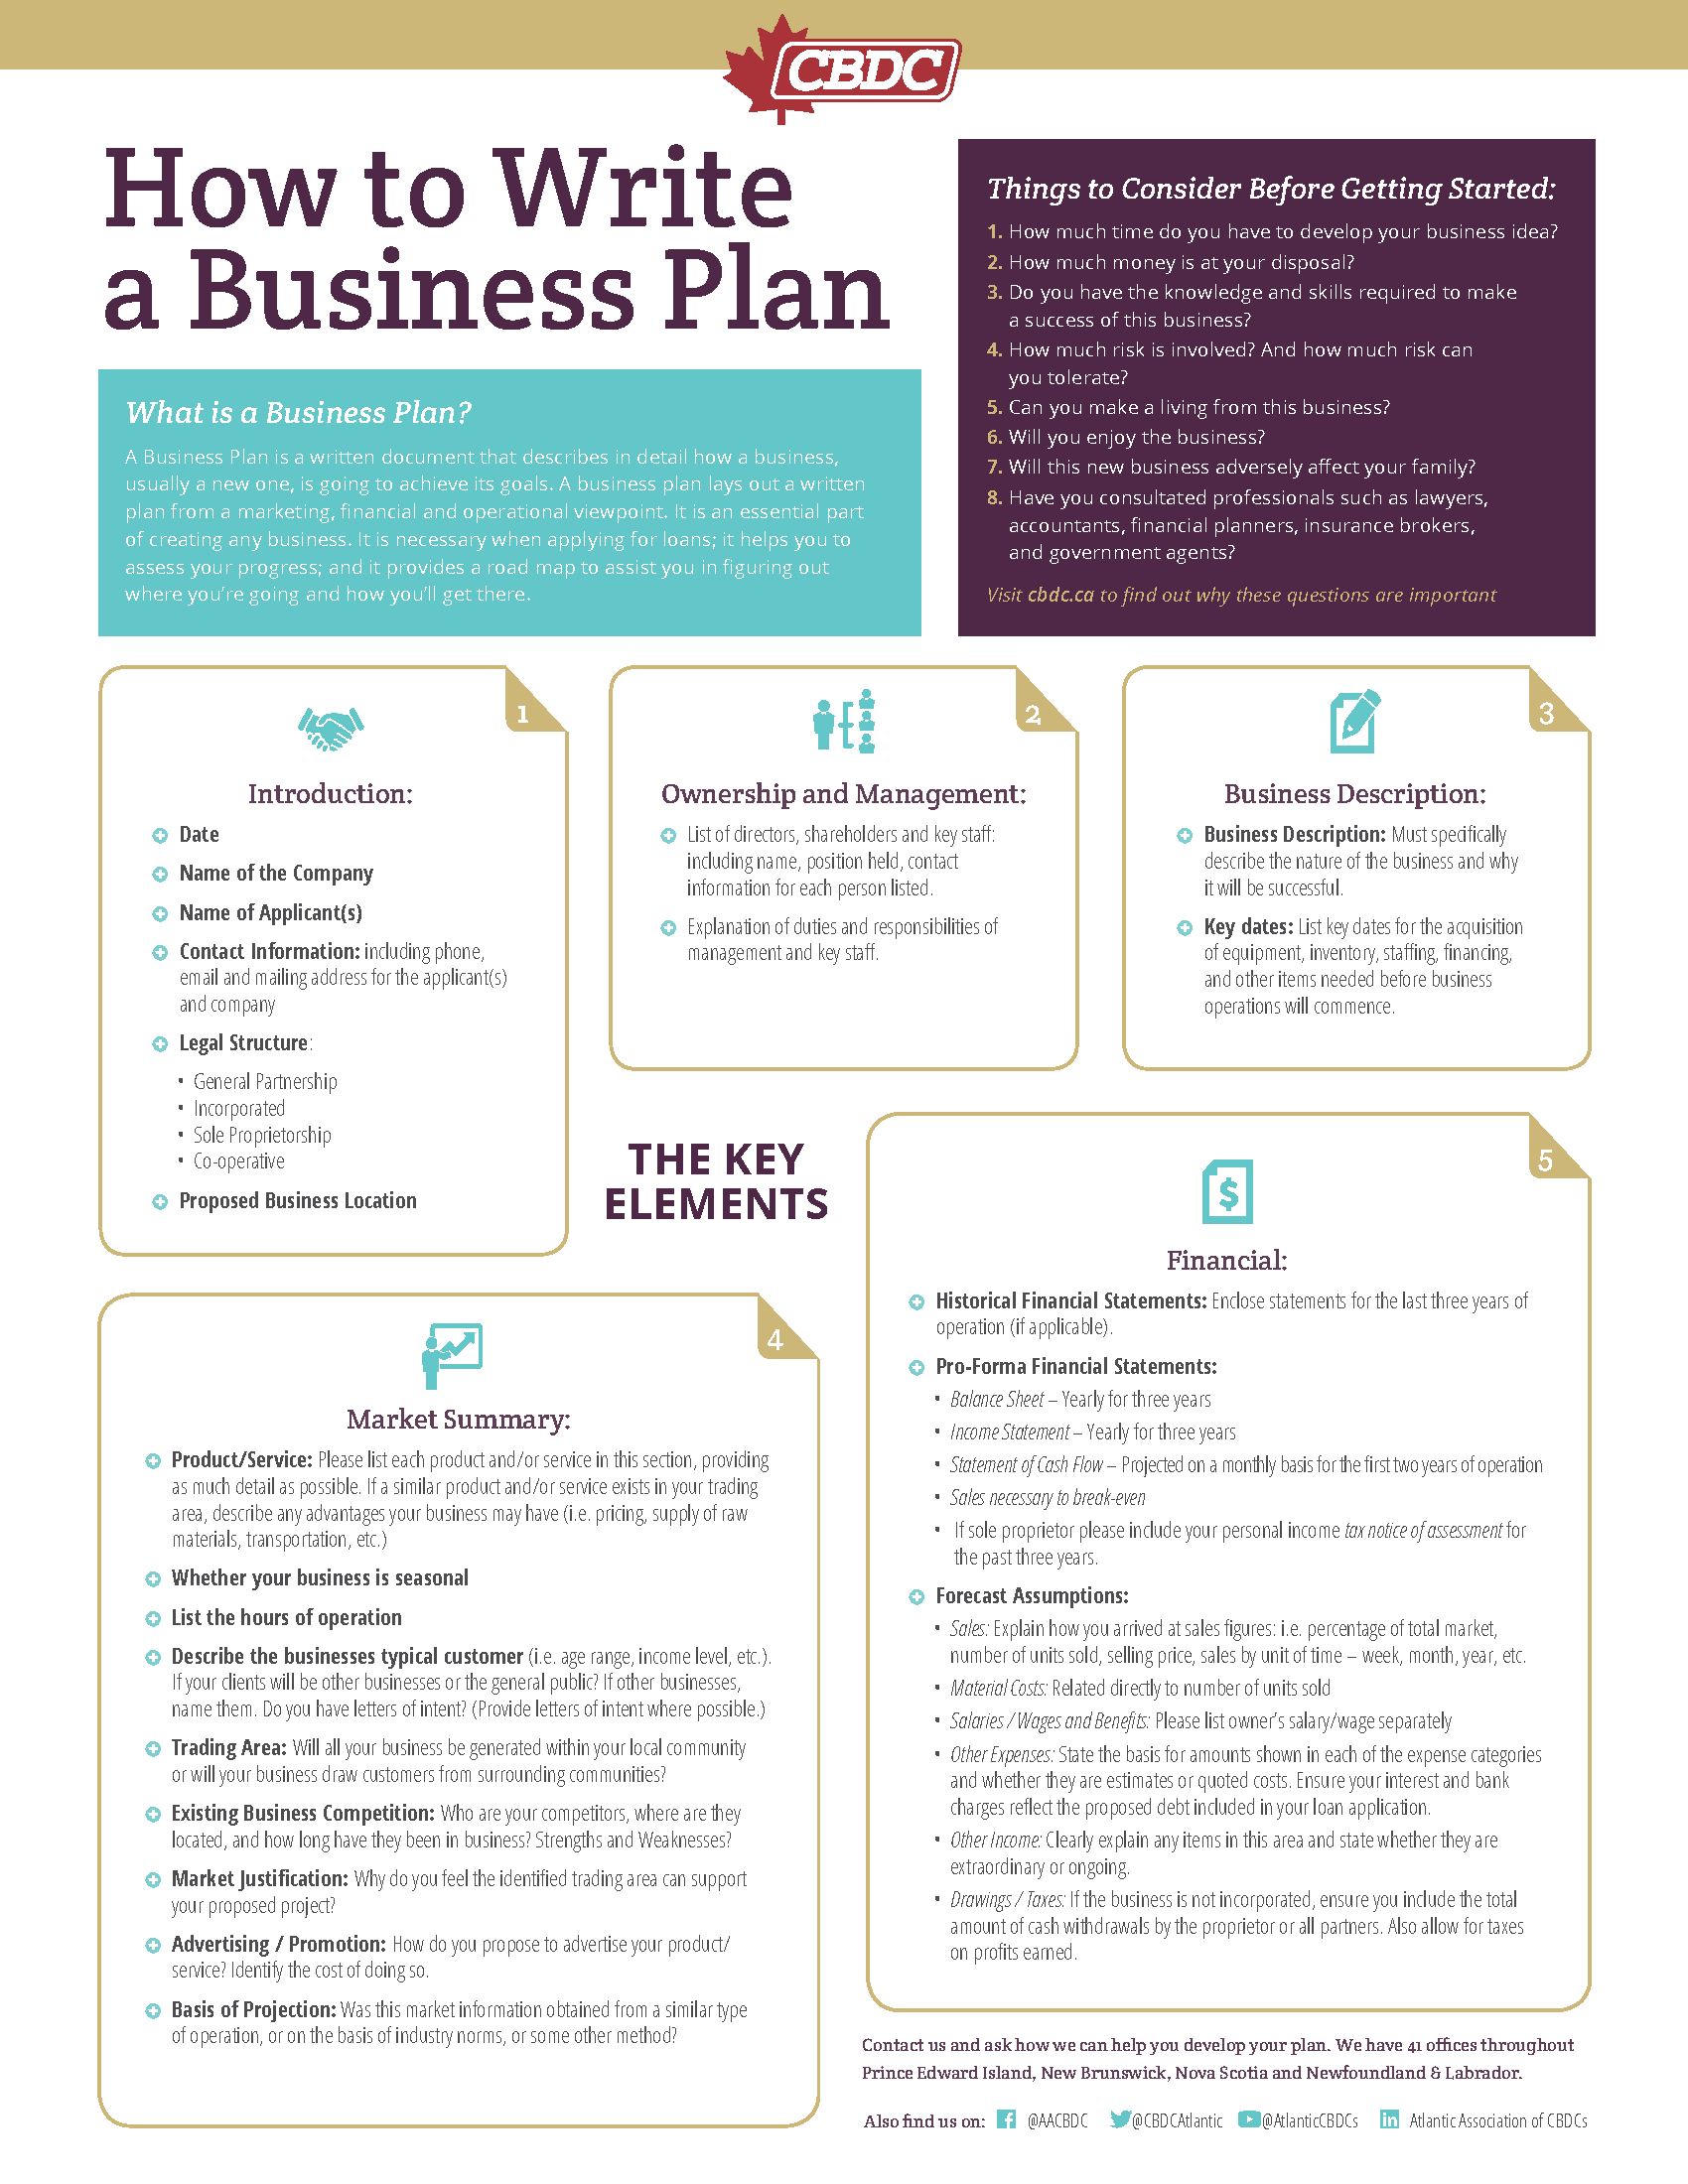 business plan template gov uk